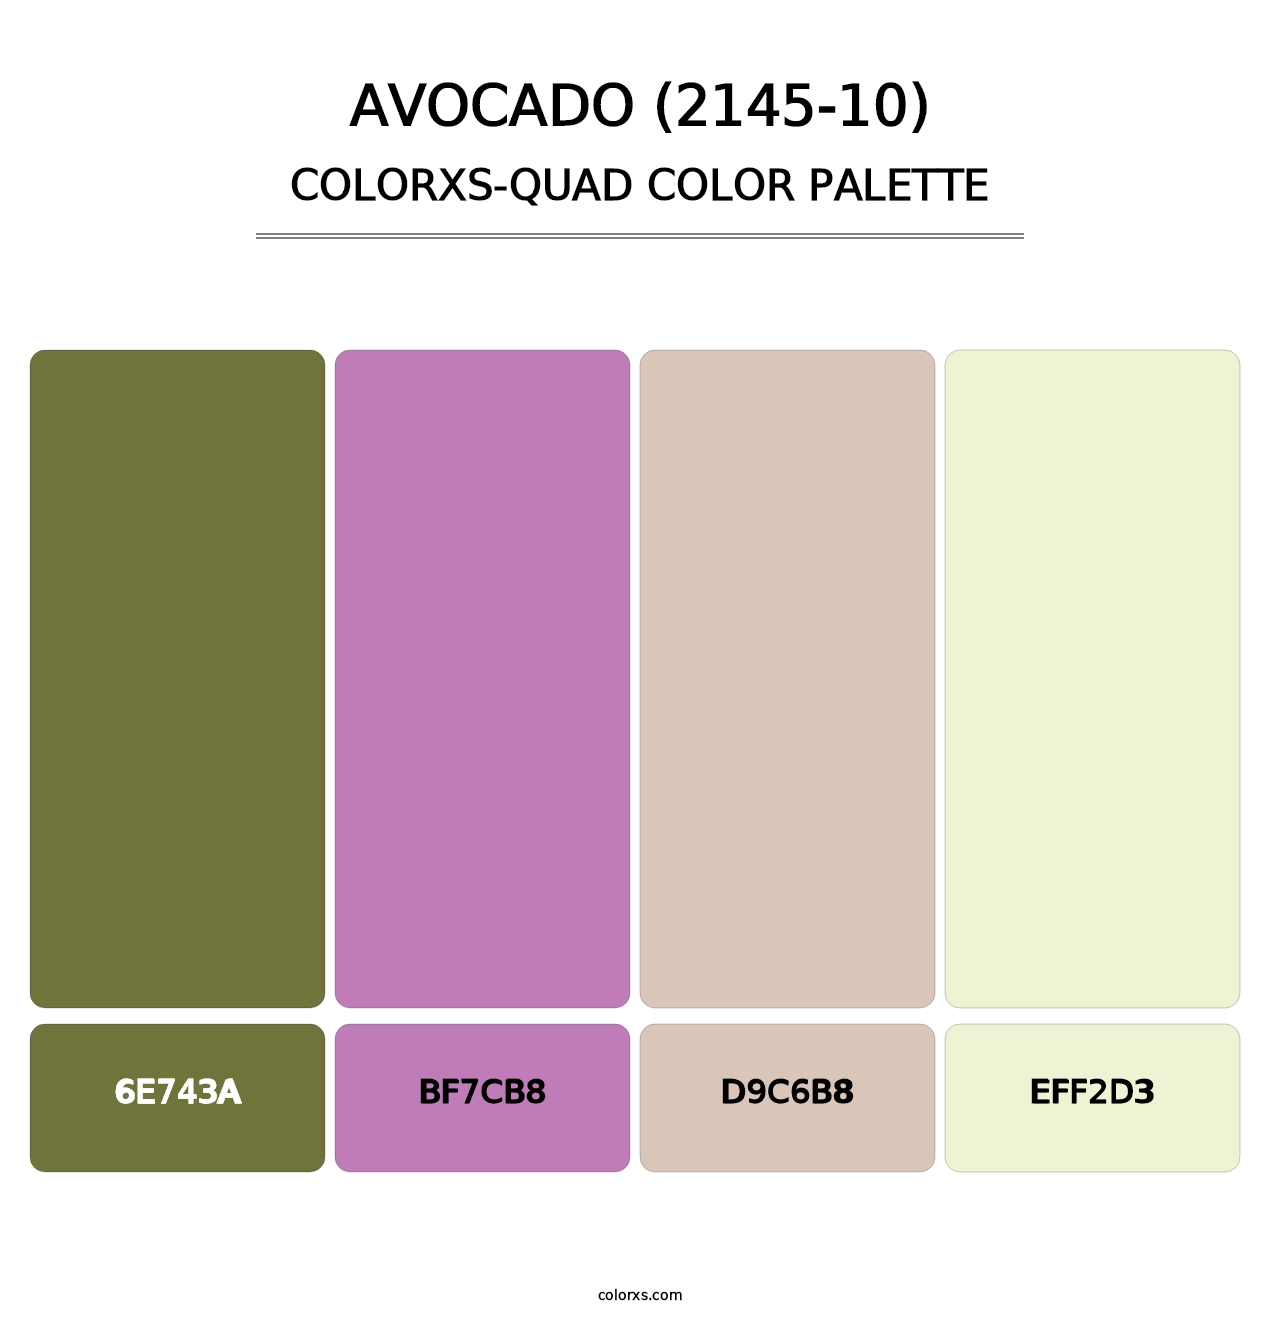 Avocado (2145-10) - Colorxs Quad Palette